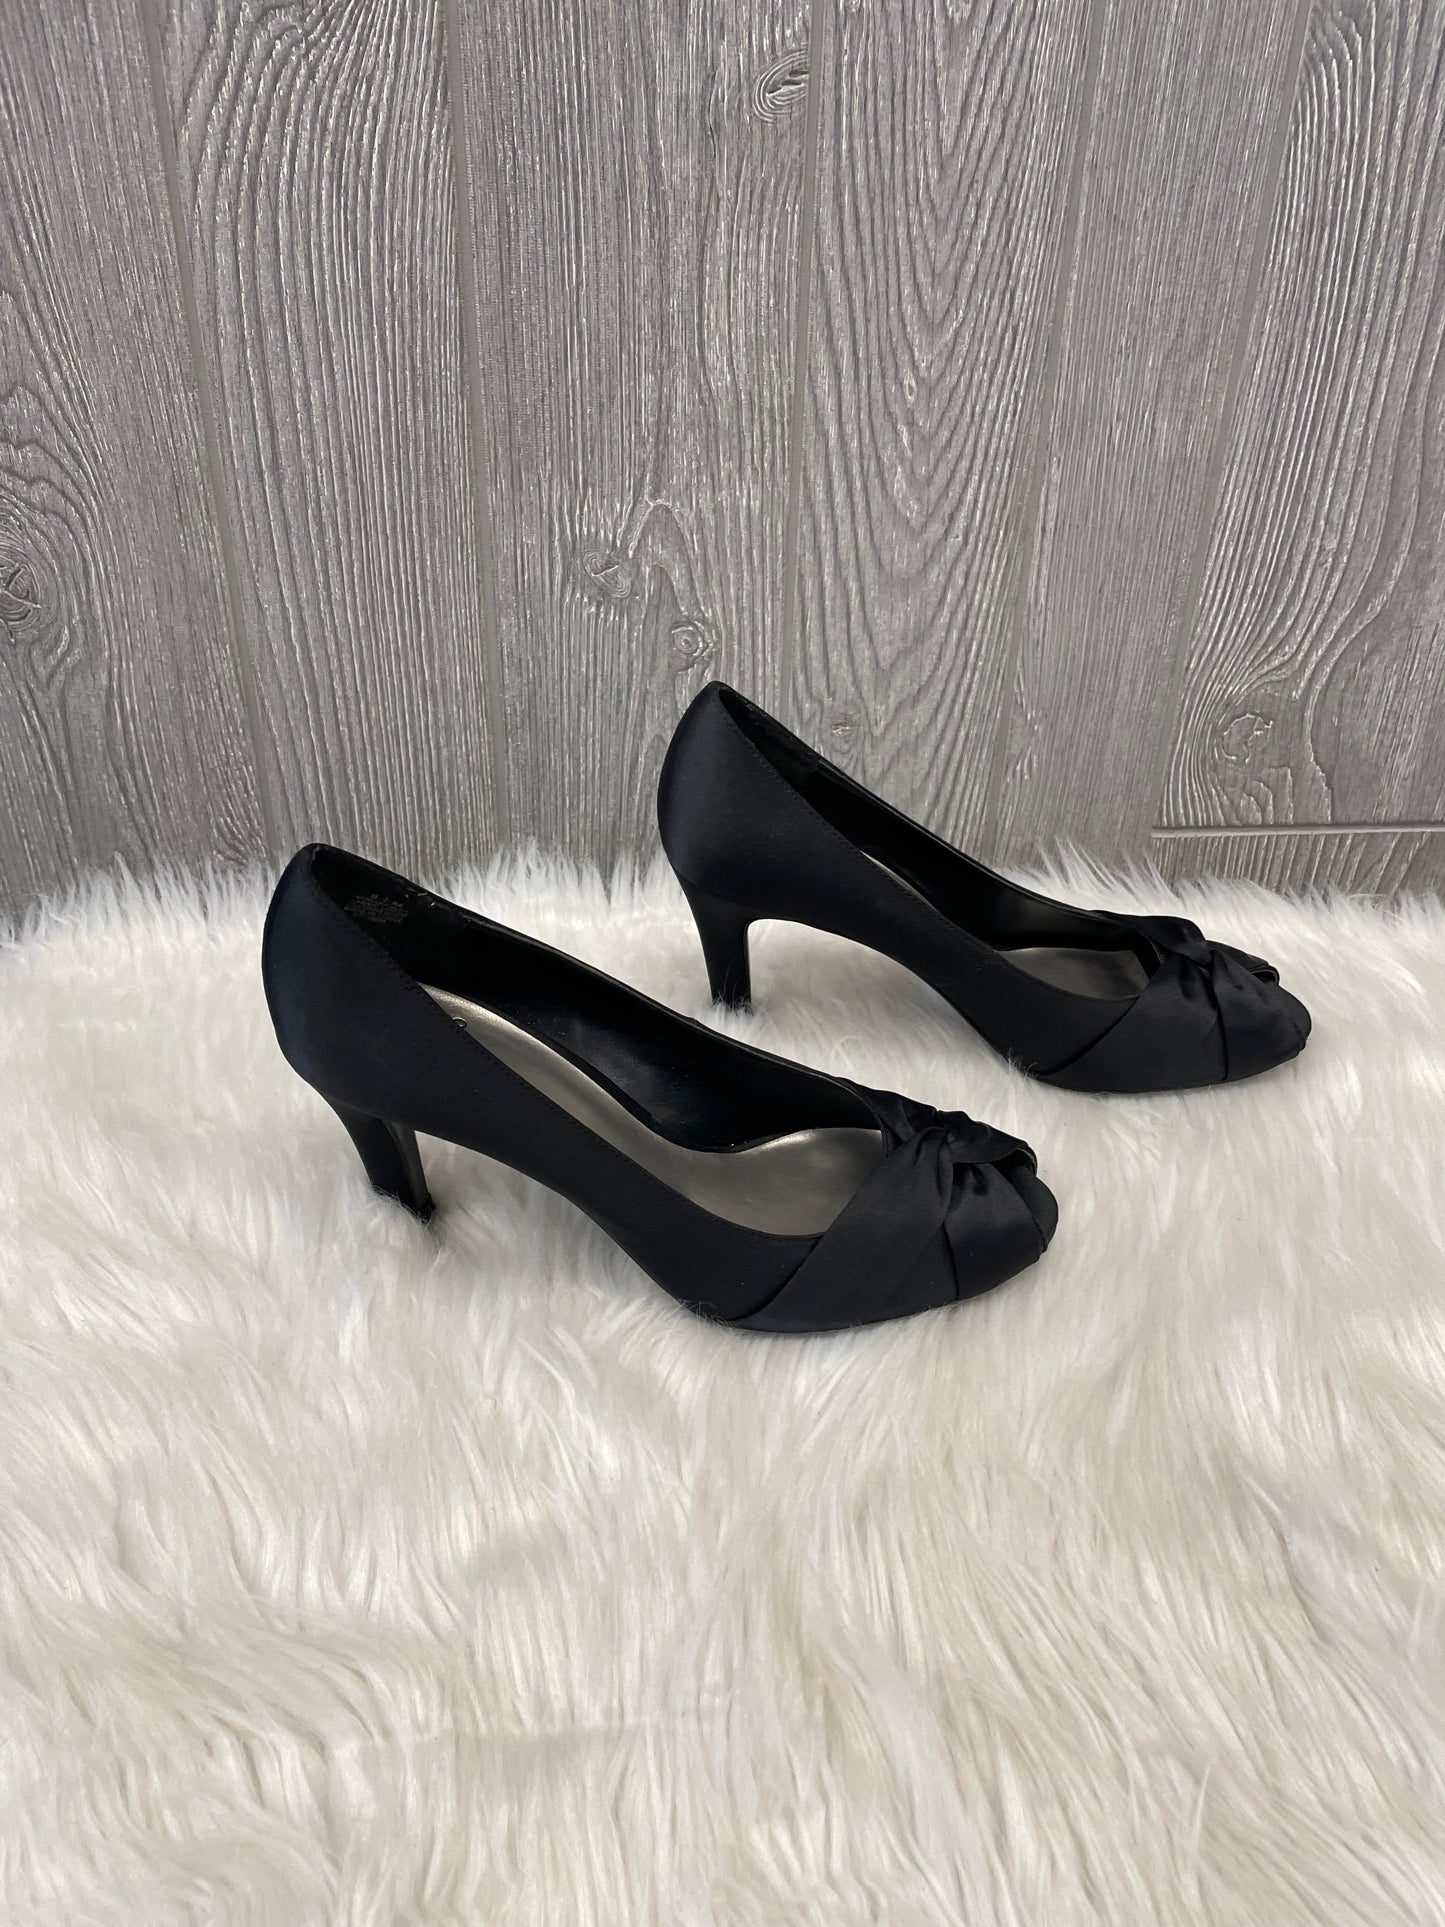 Black Shoes Heels Stiletto Mootsies Tootsies, Size 8.5